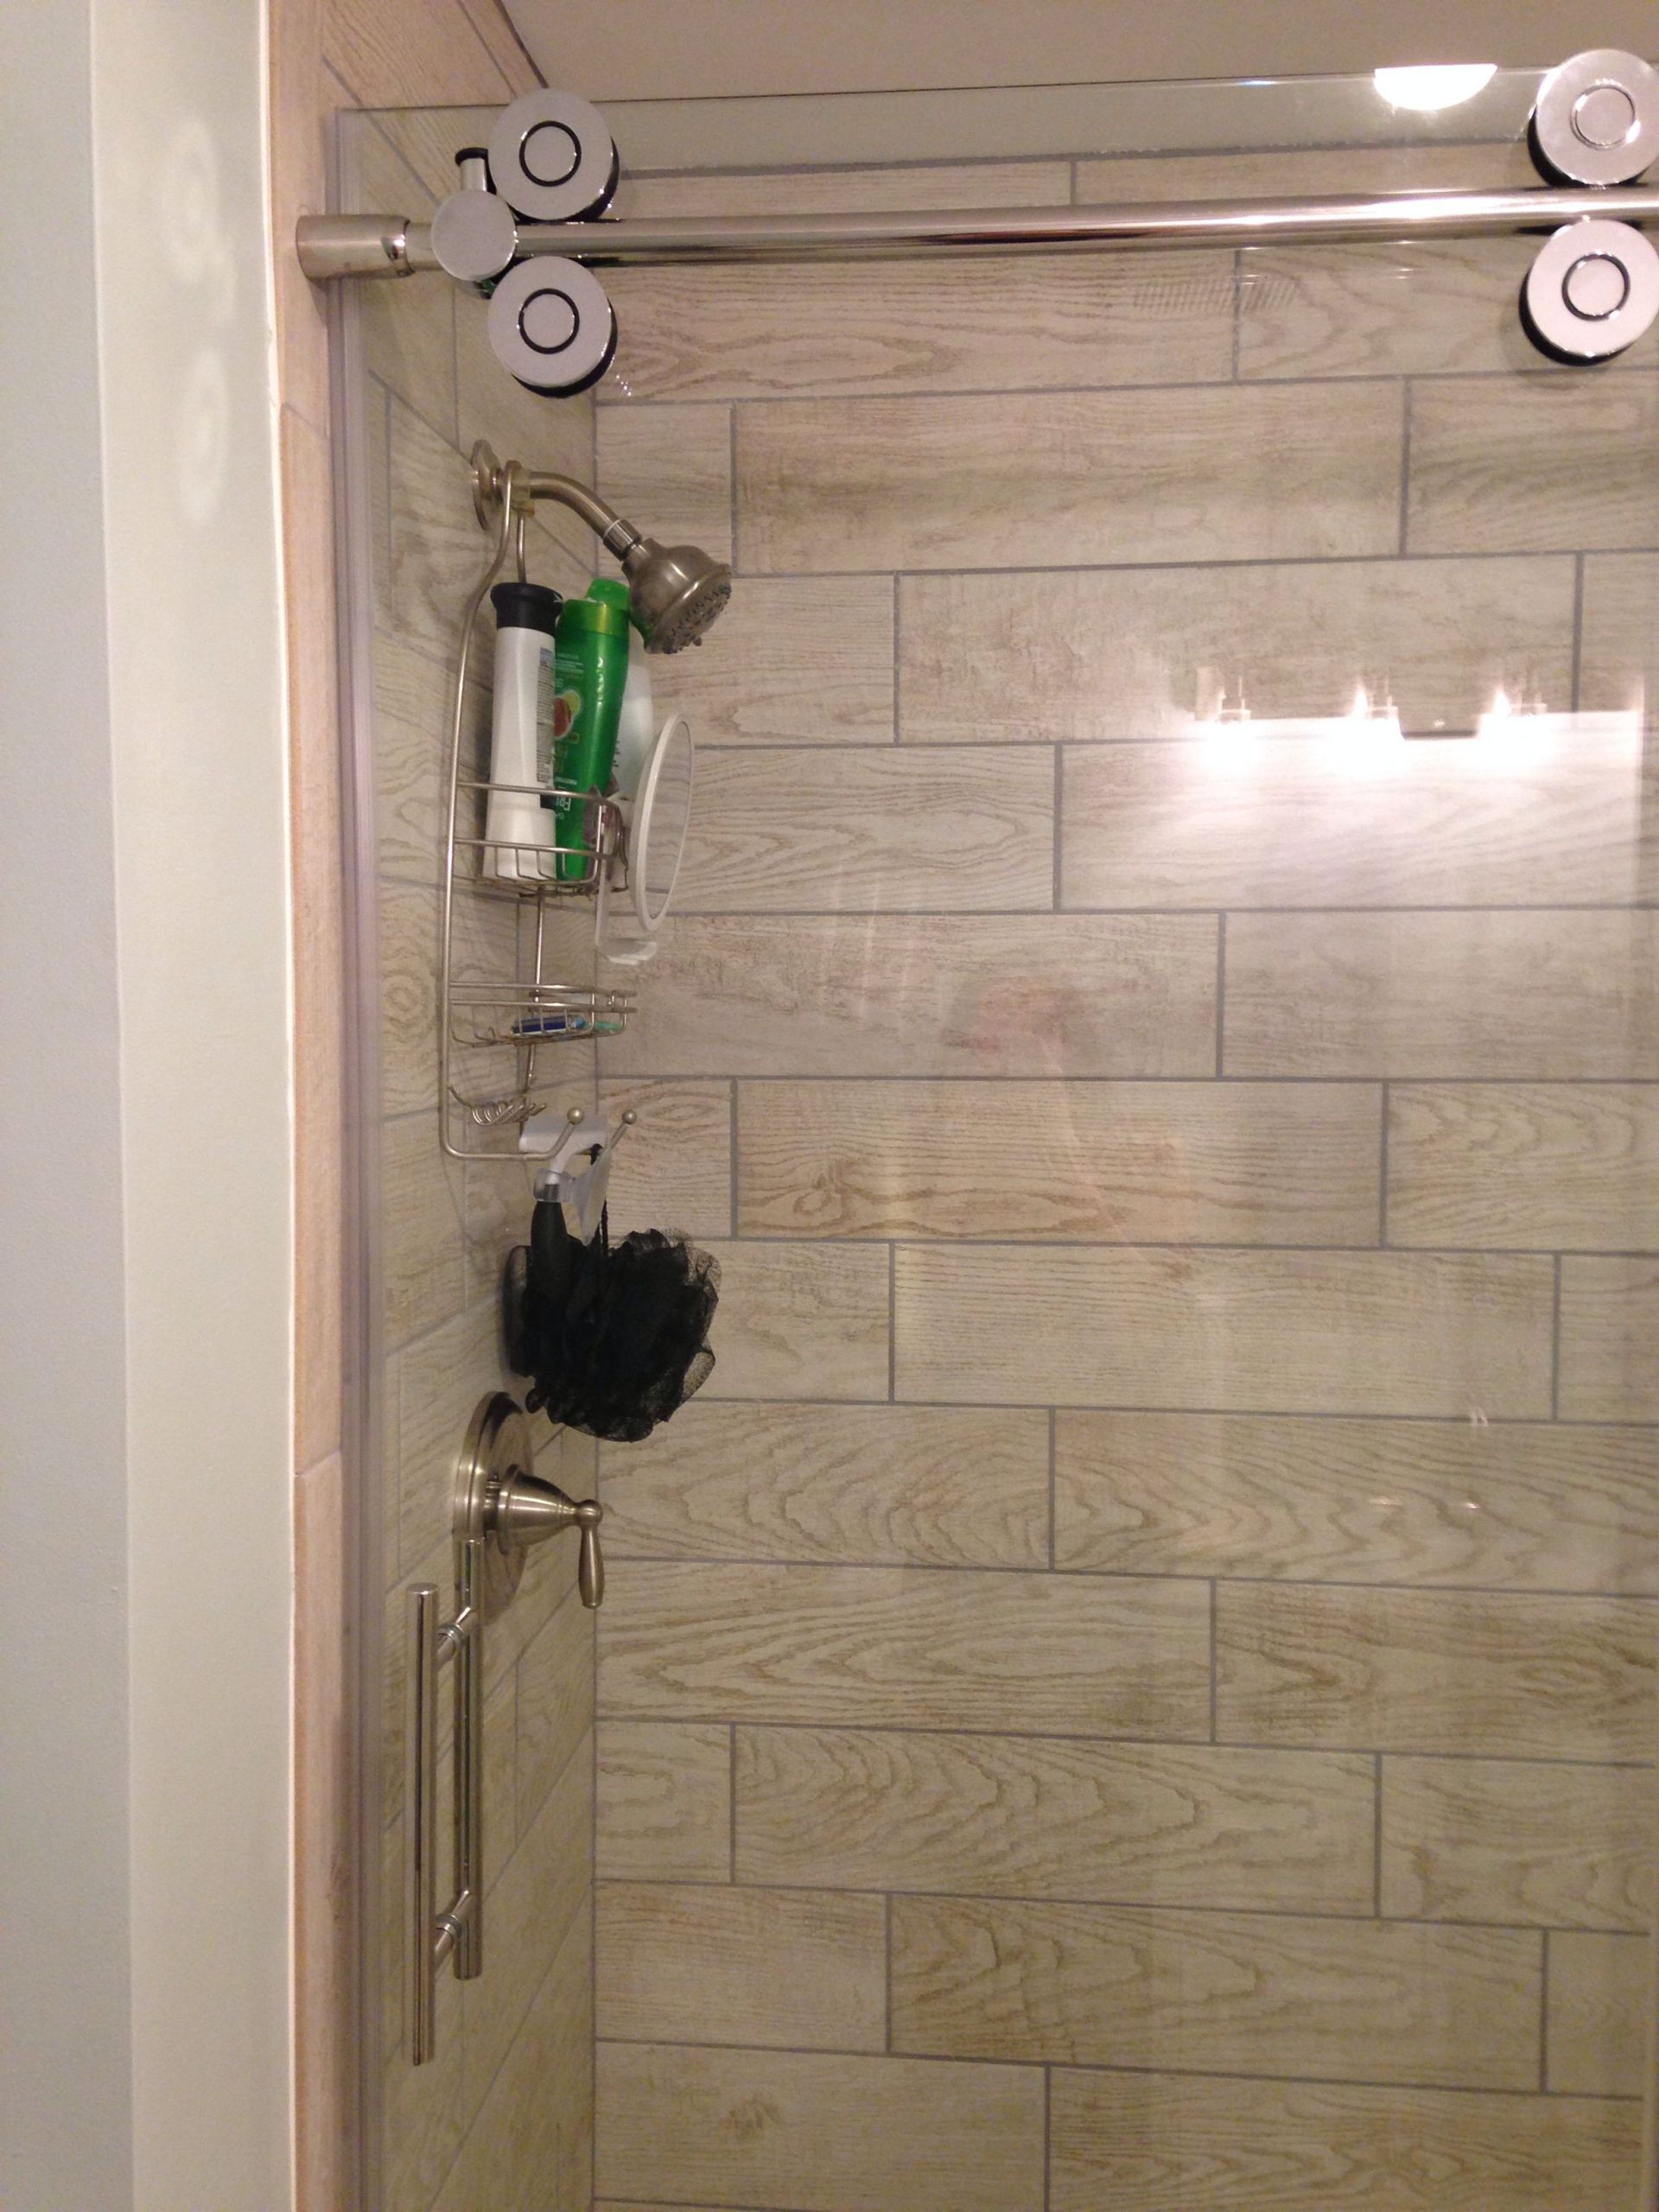 Home Depot Bathroom Shower Tile
 Wood tile in shower stall marazzi Home Depot glass door